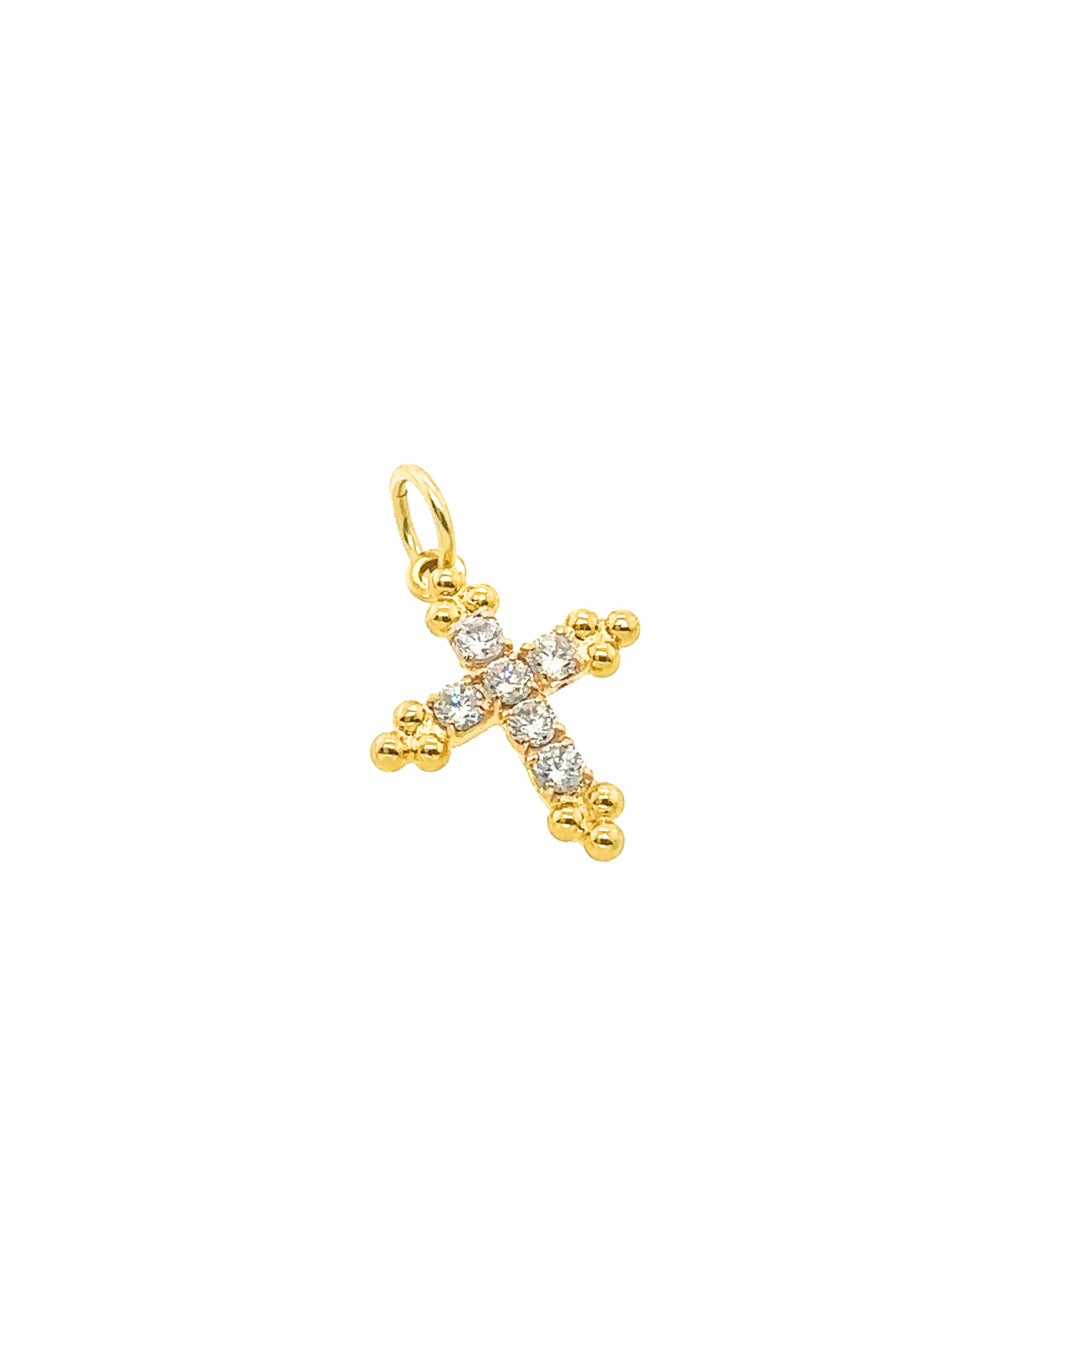 14k gold fill catholic Christian cross protection luck talisman necklace pendant charm